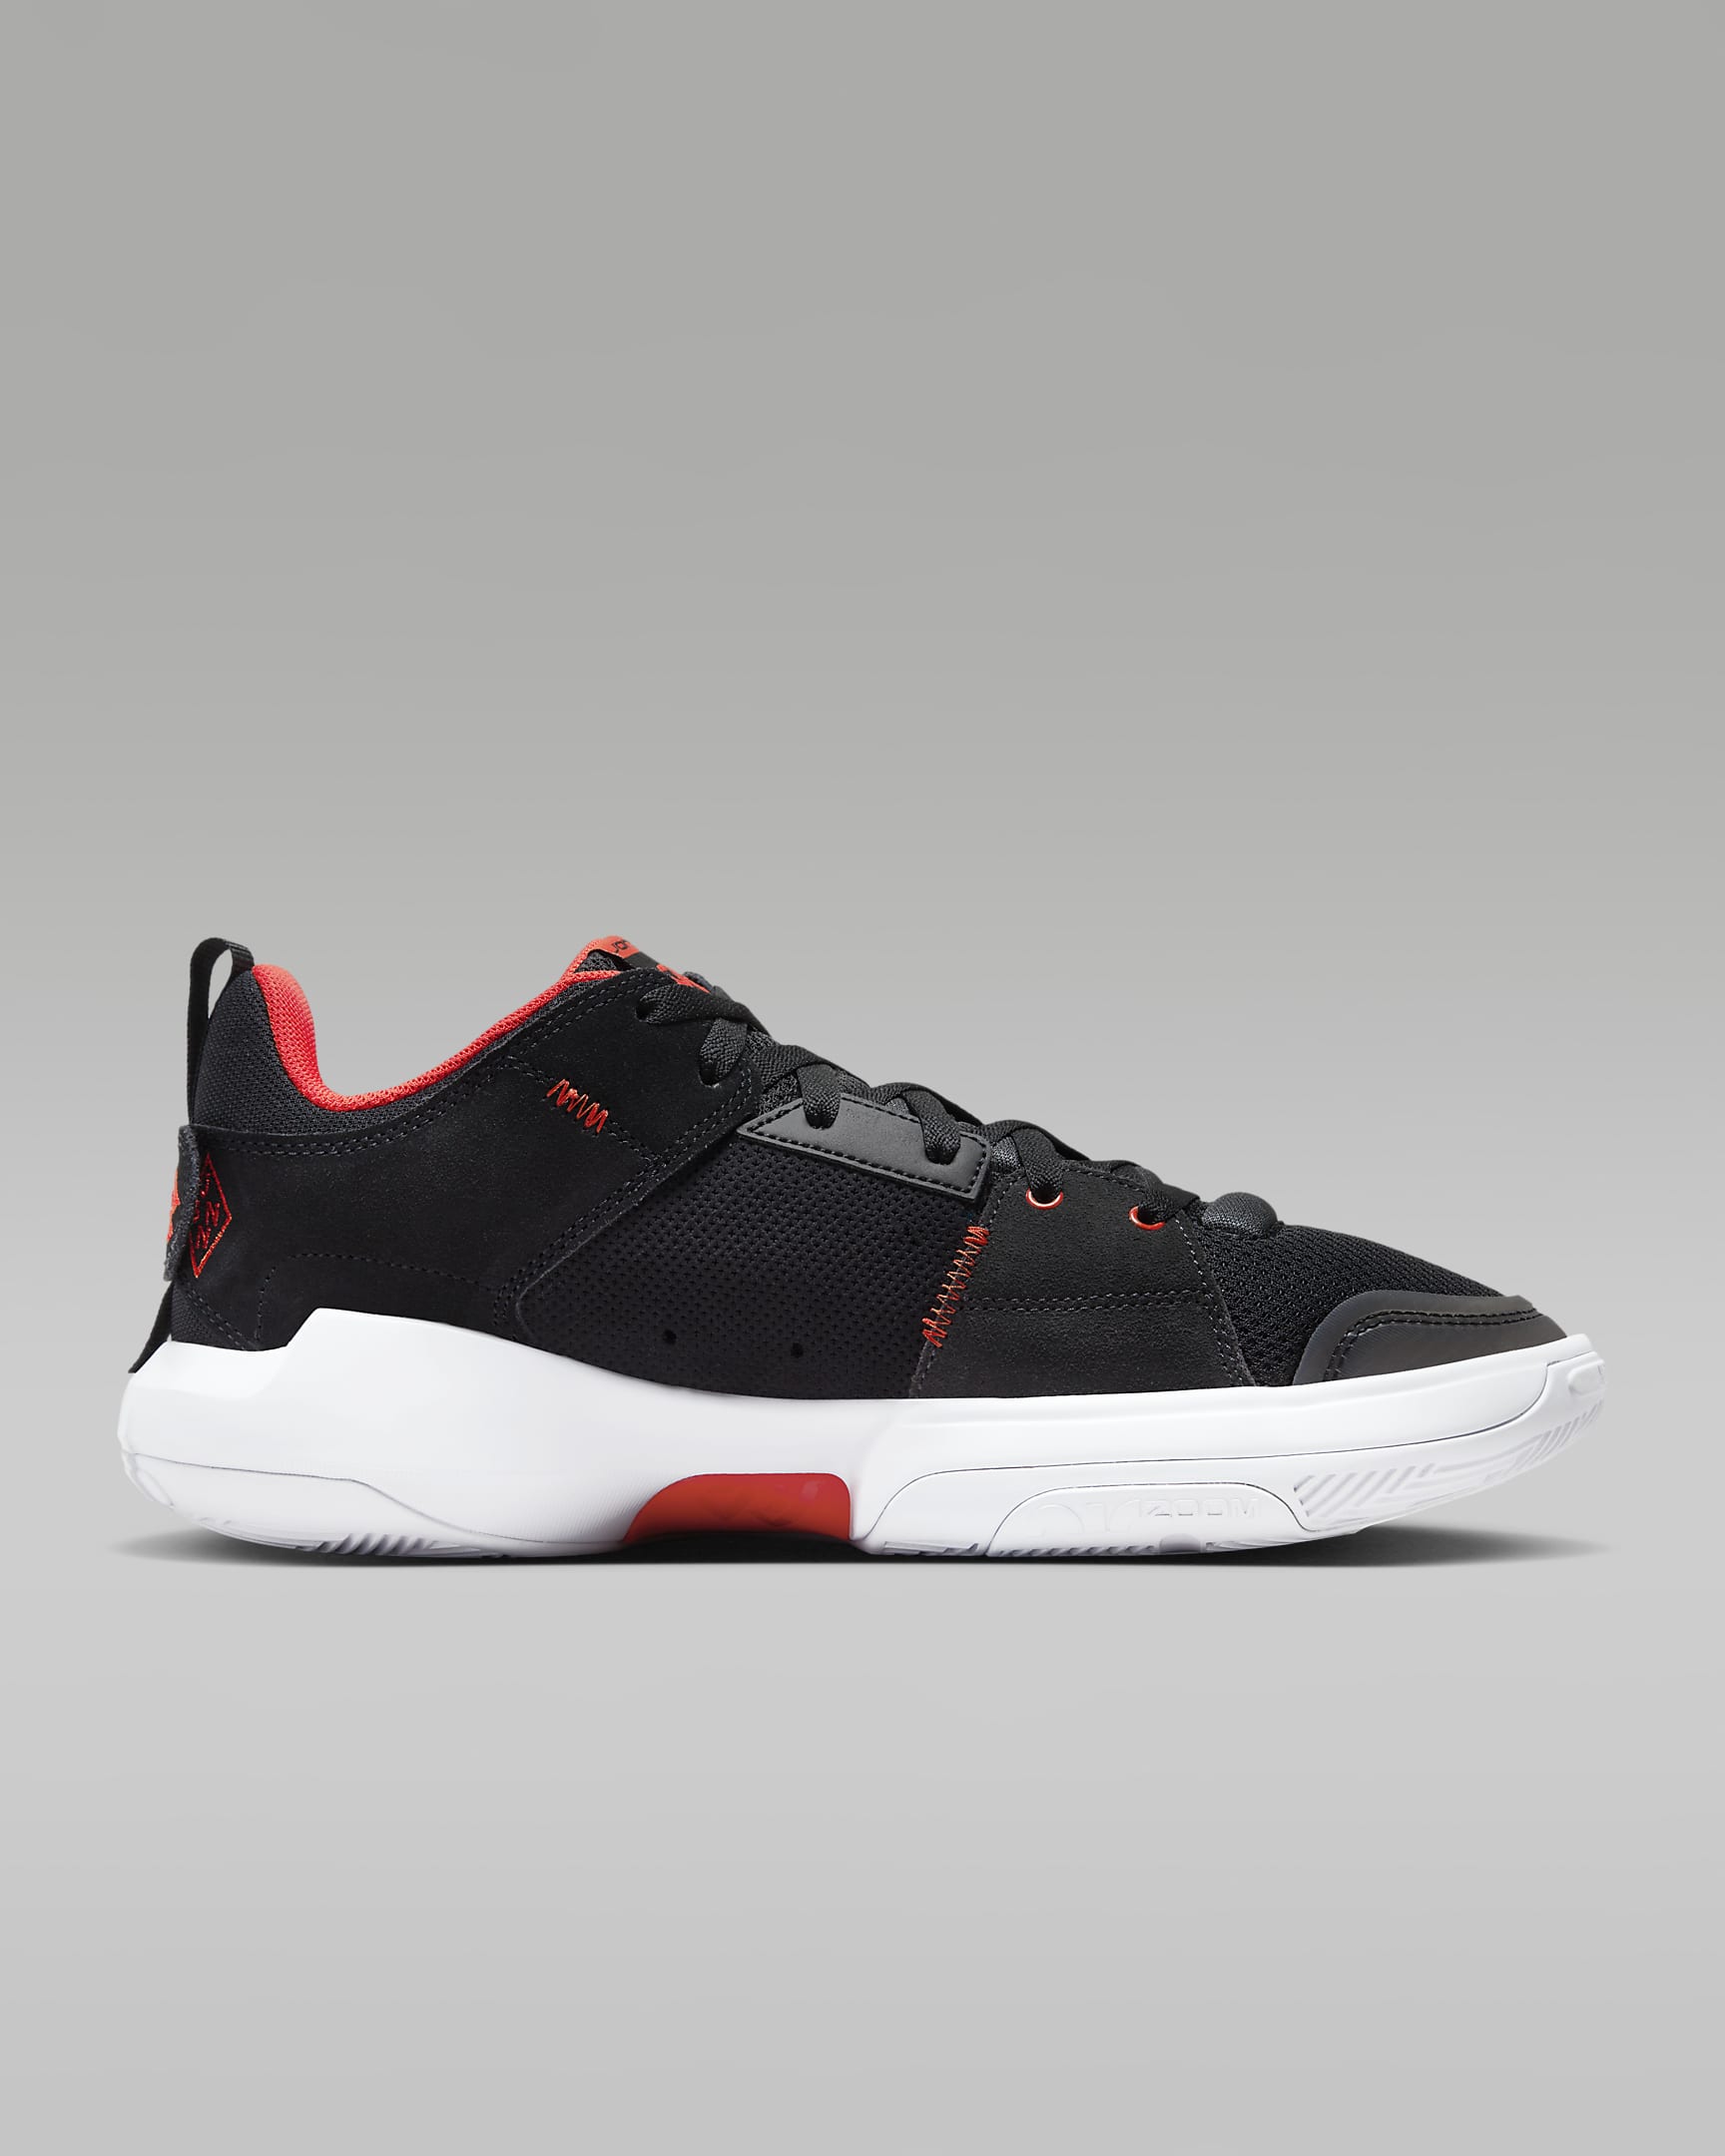 Jordan One Take 5 PF Men's Shoes - Black/White/Anthracite/Habanero Red